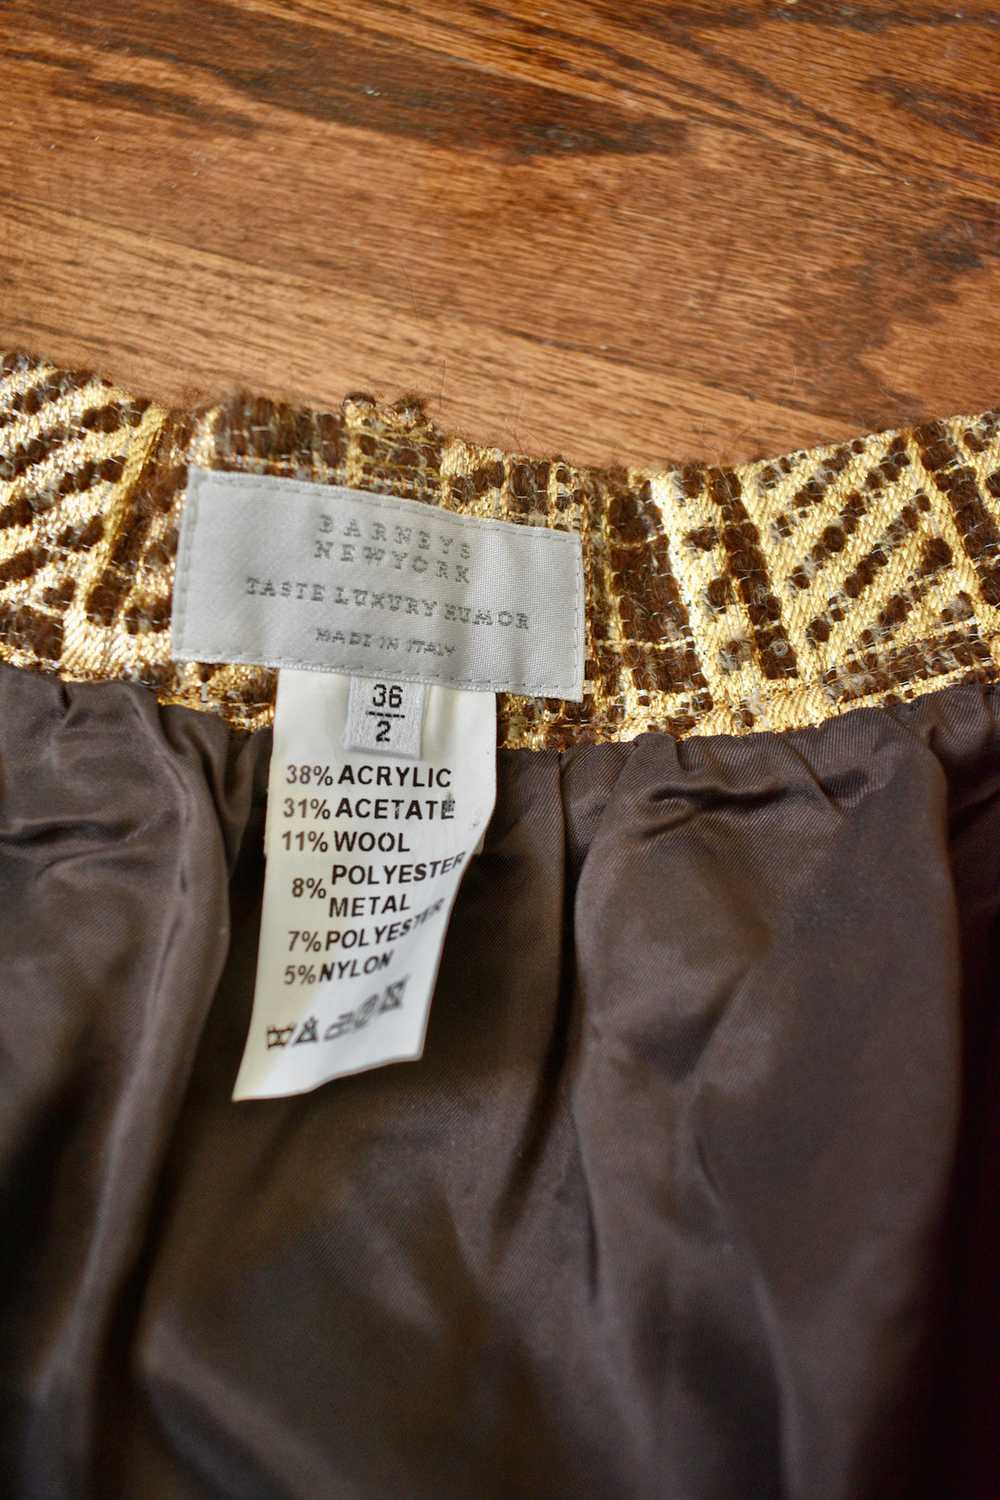 Barneys New York Wrap Skirt Made In Italy - image 8